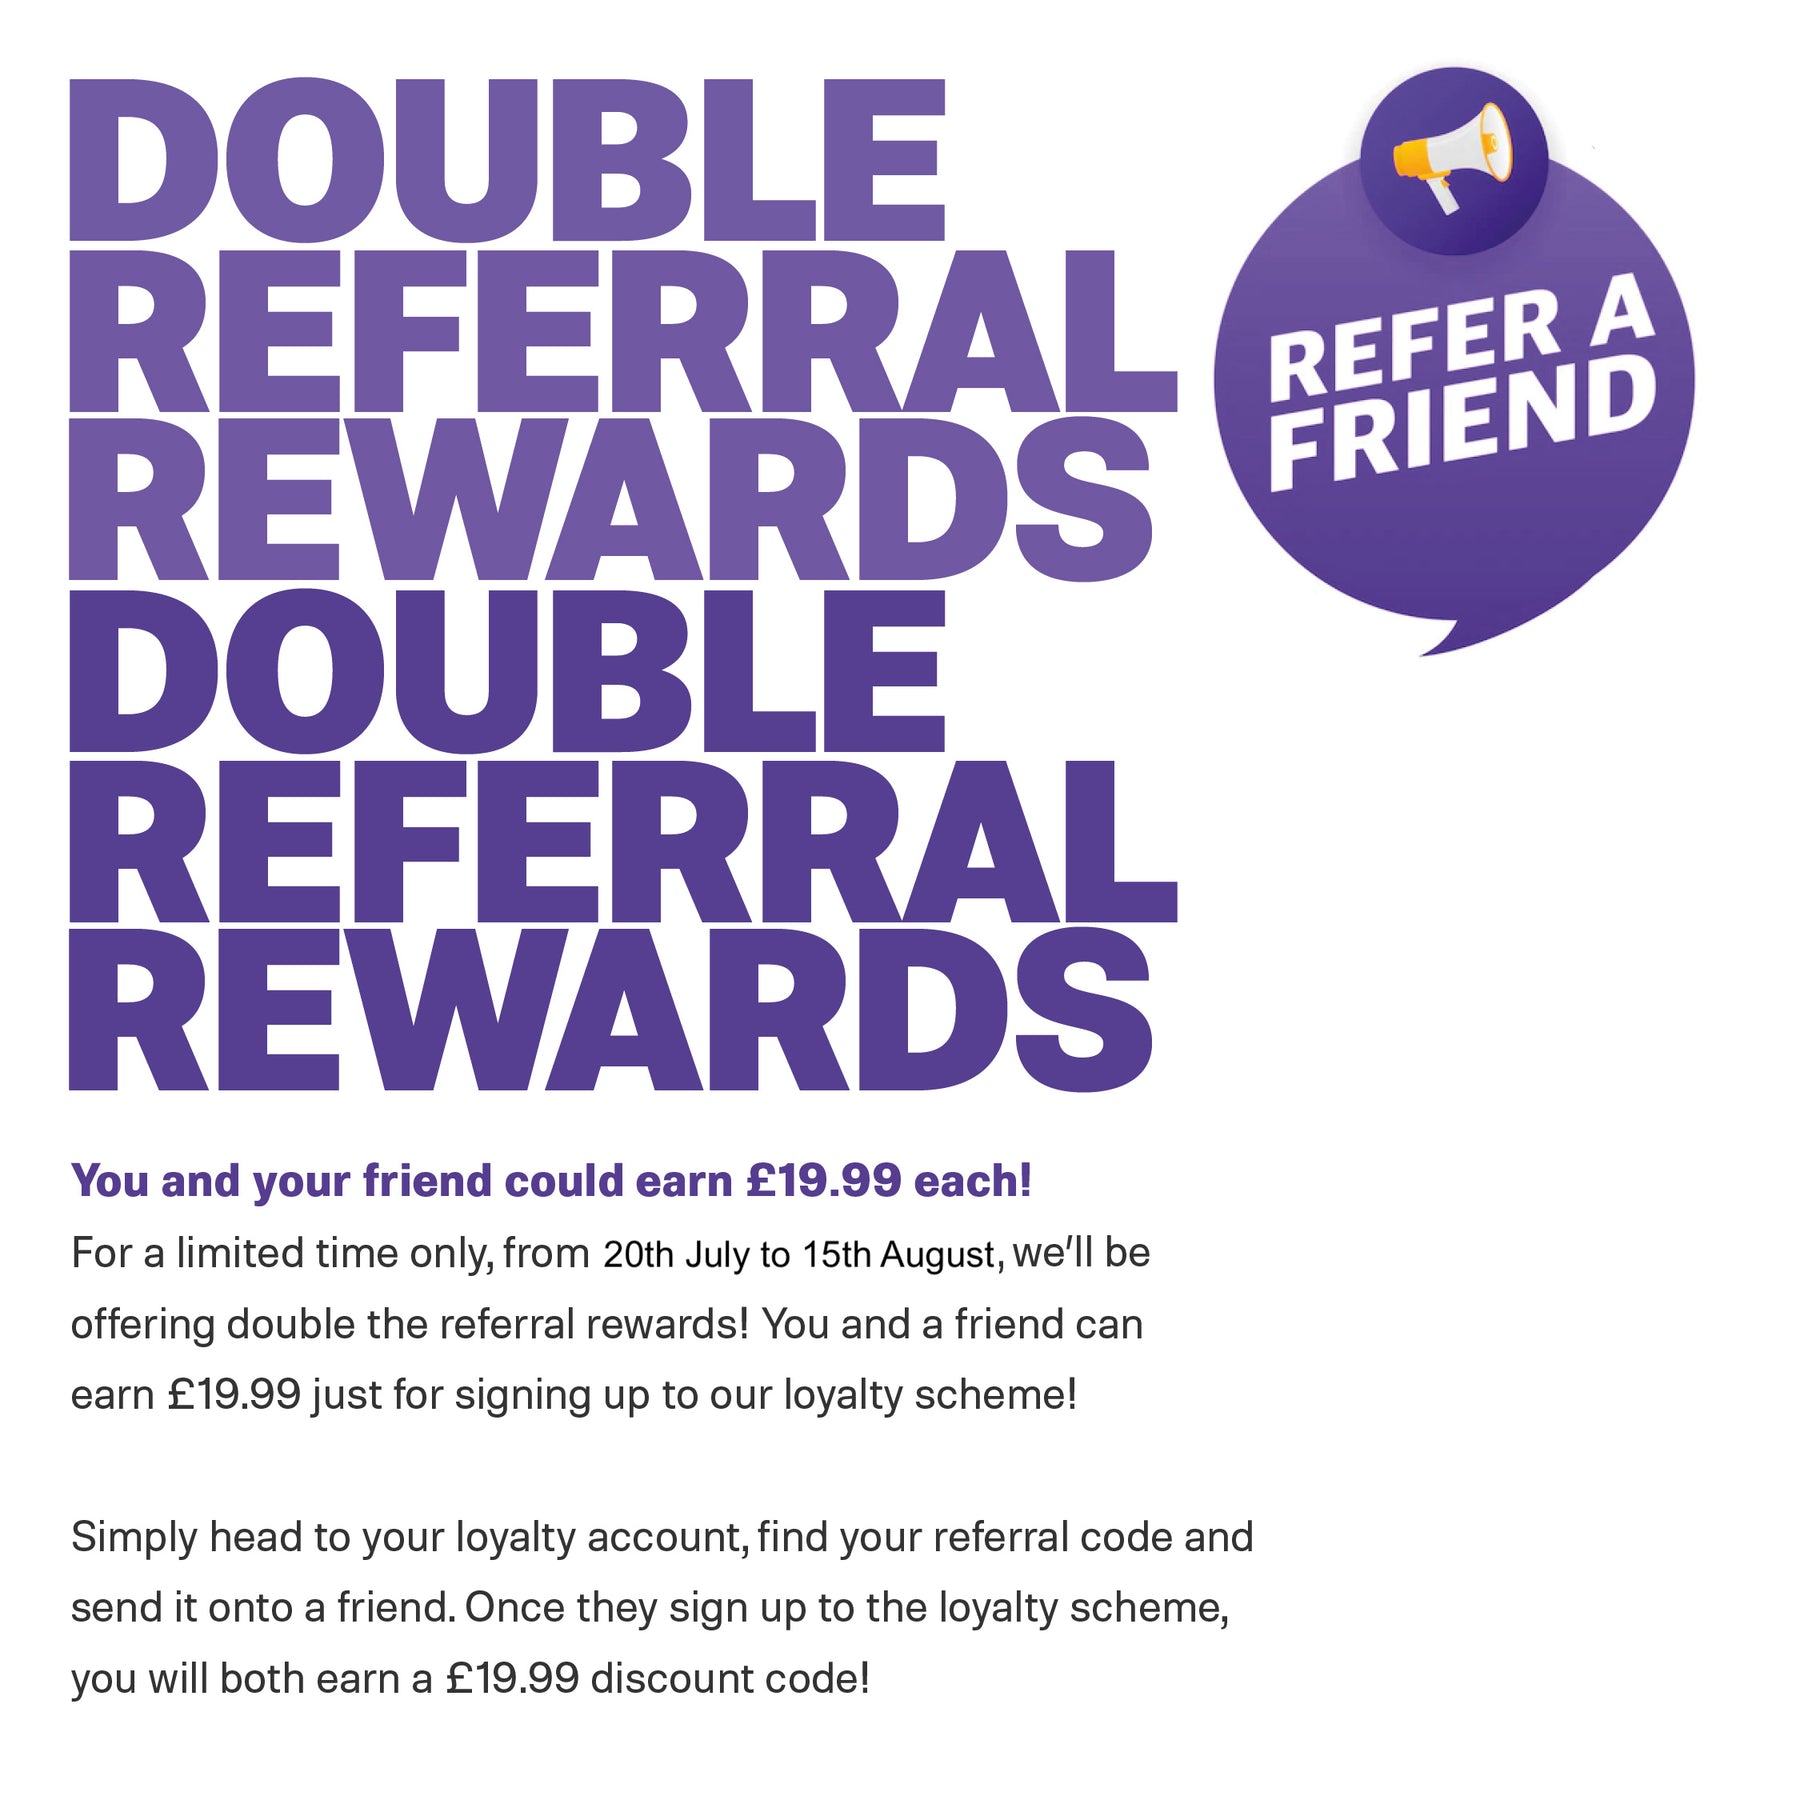 Double Referral Rewards